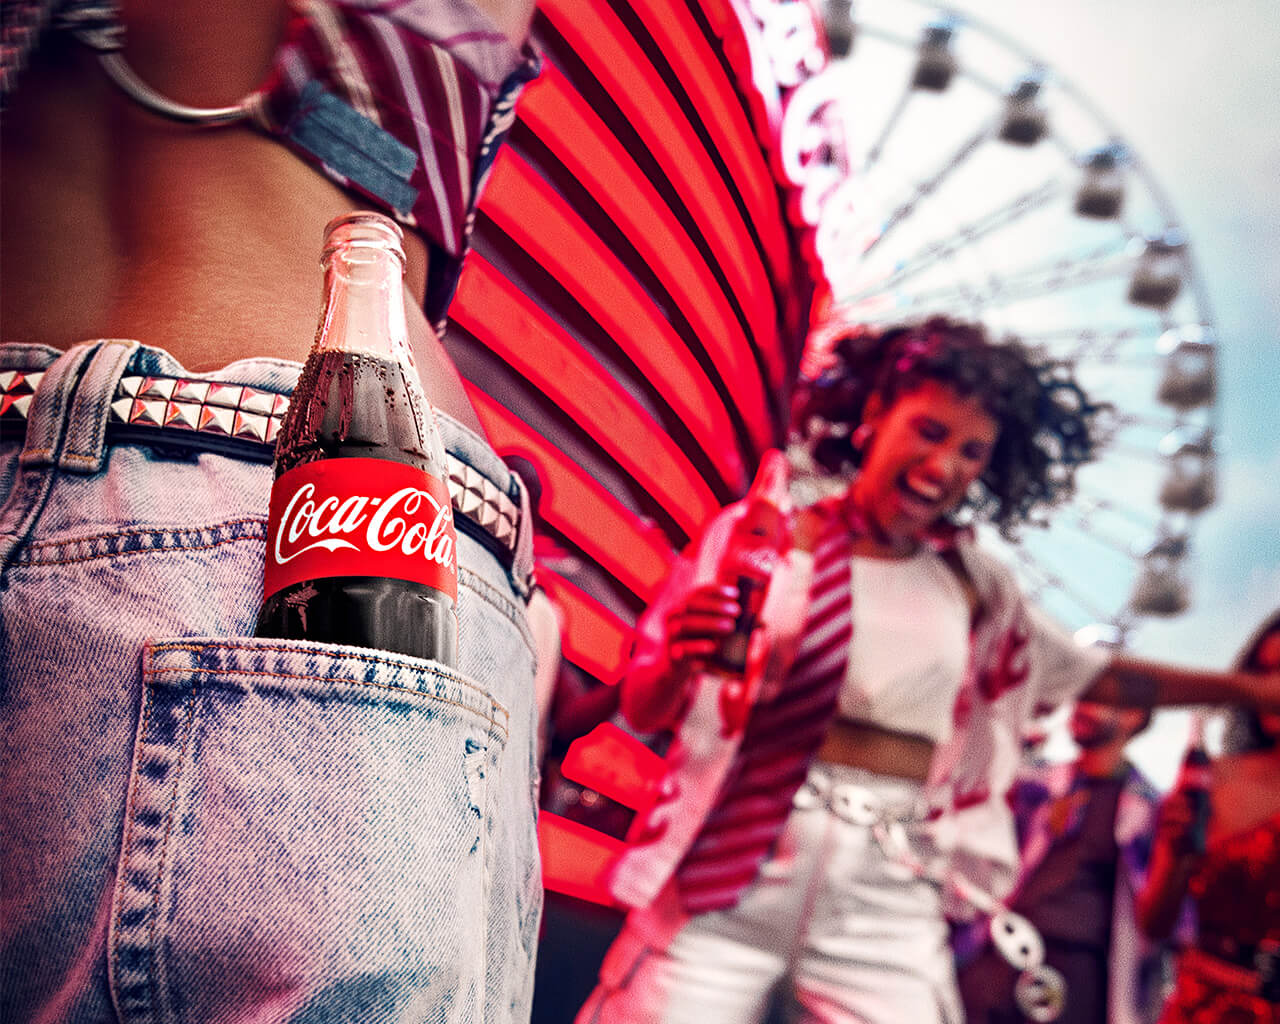 Festival fans celebrating with Coke